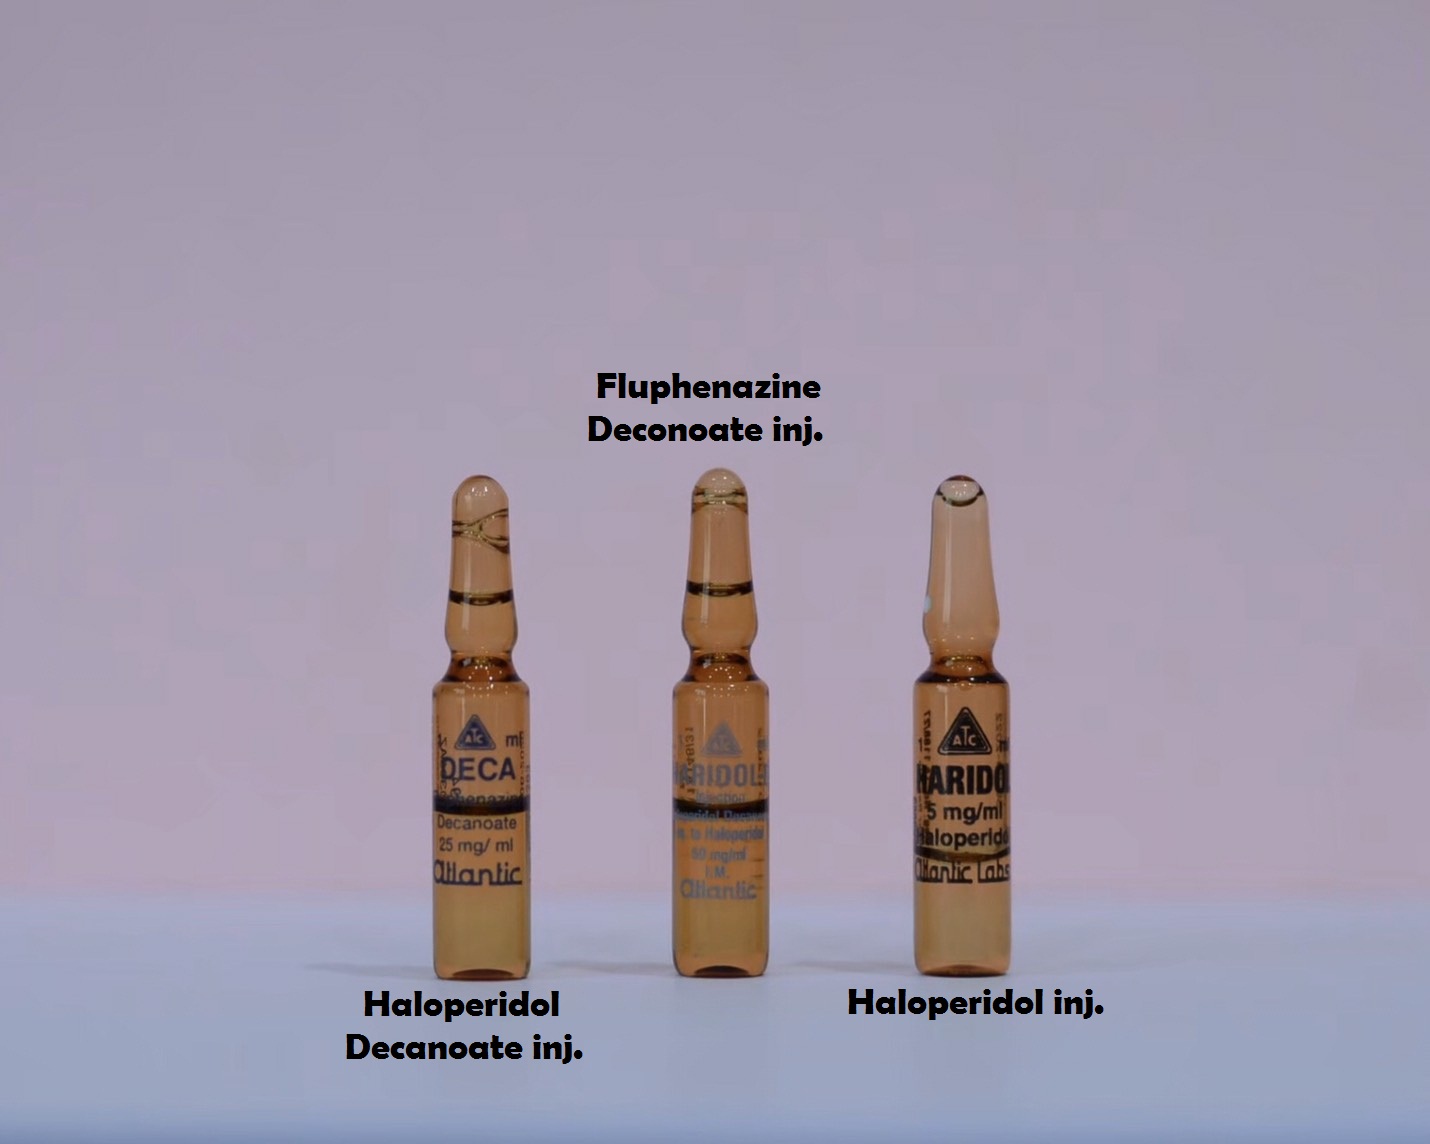 Fluphenazine inj.มองคล้ายกับ Haloperidol decanoate inj. และ Hadolperidol inj.